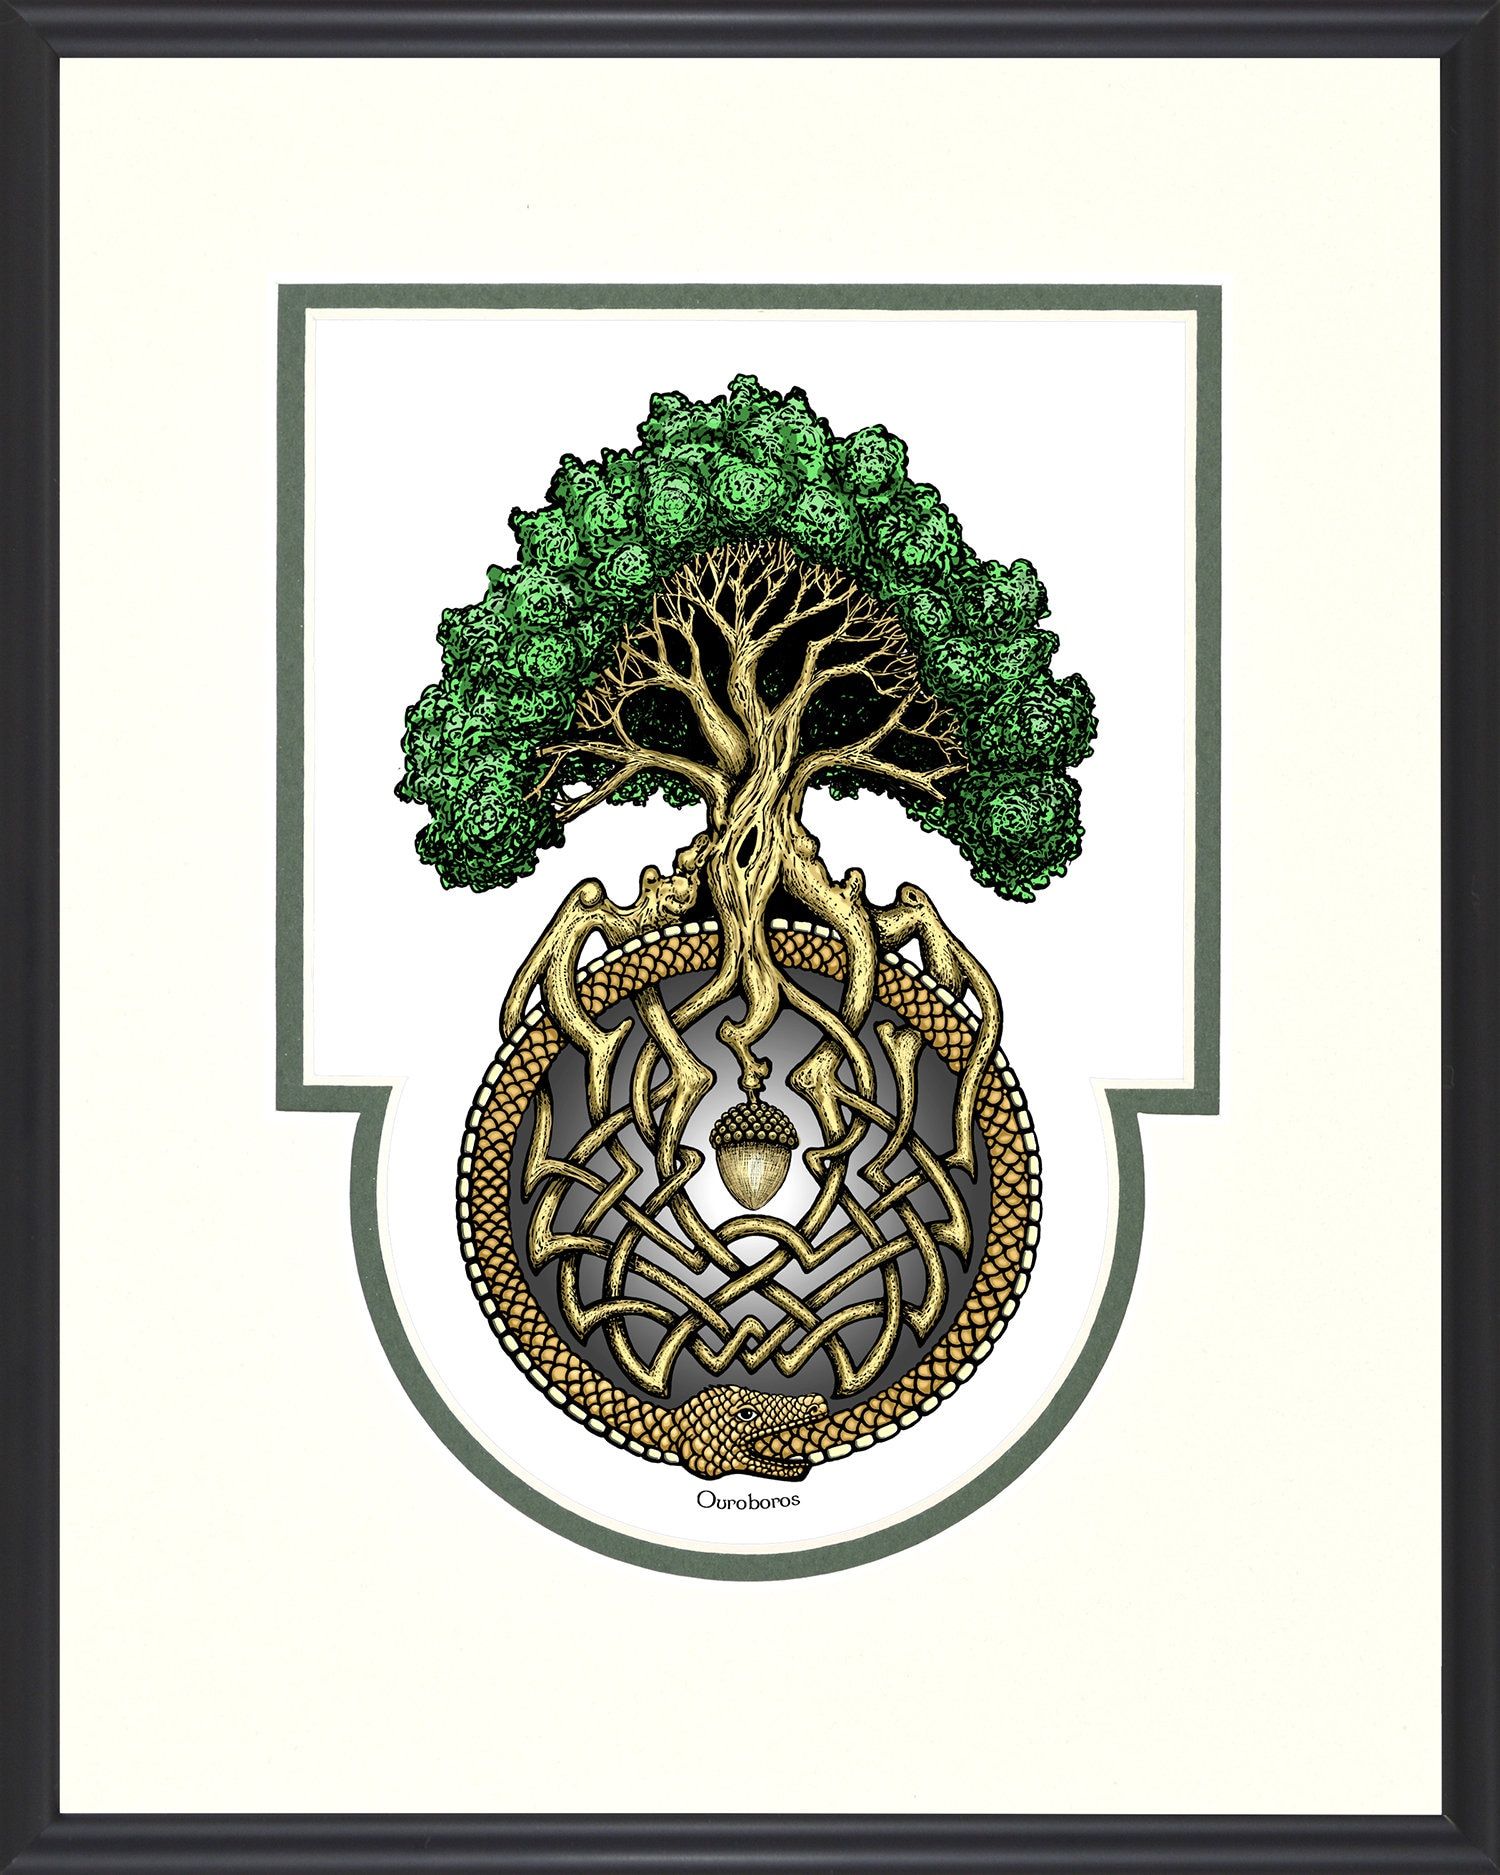 Ouroboros Tree  Framed Digital Art Print – 8 X 10 With Dragon Tree Framed Art Prints (View 3 of 15)